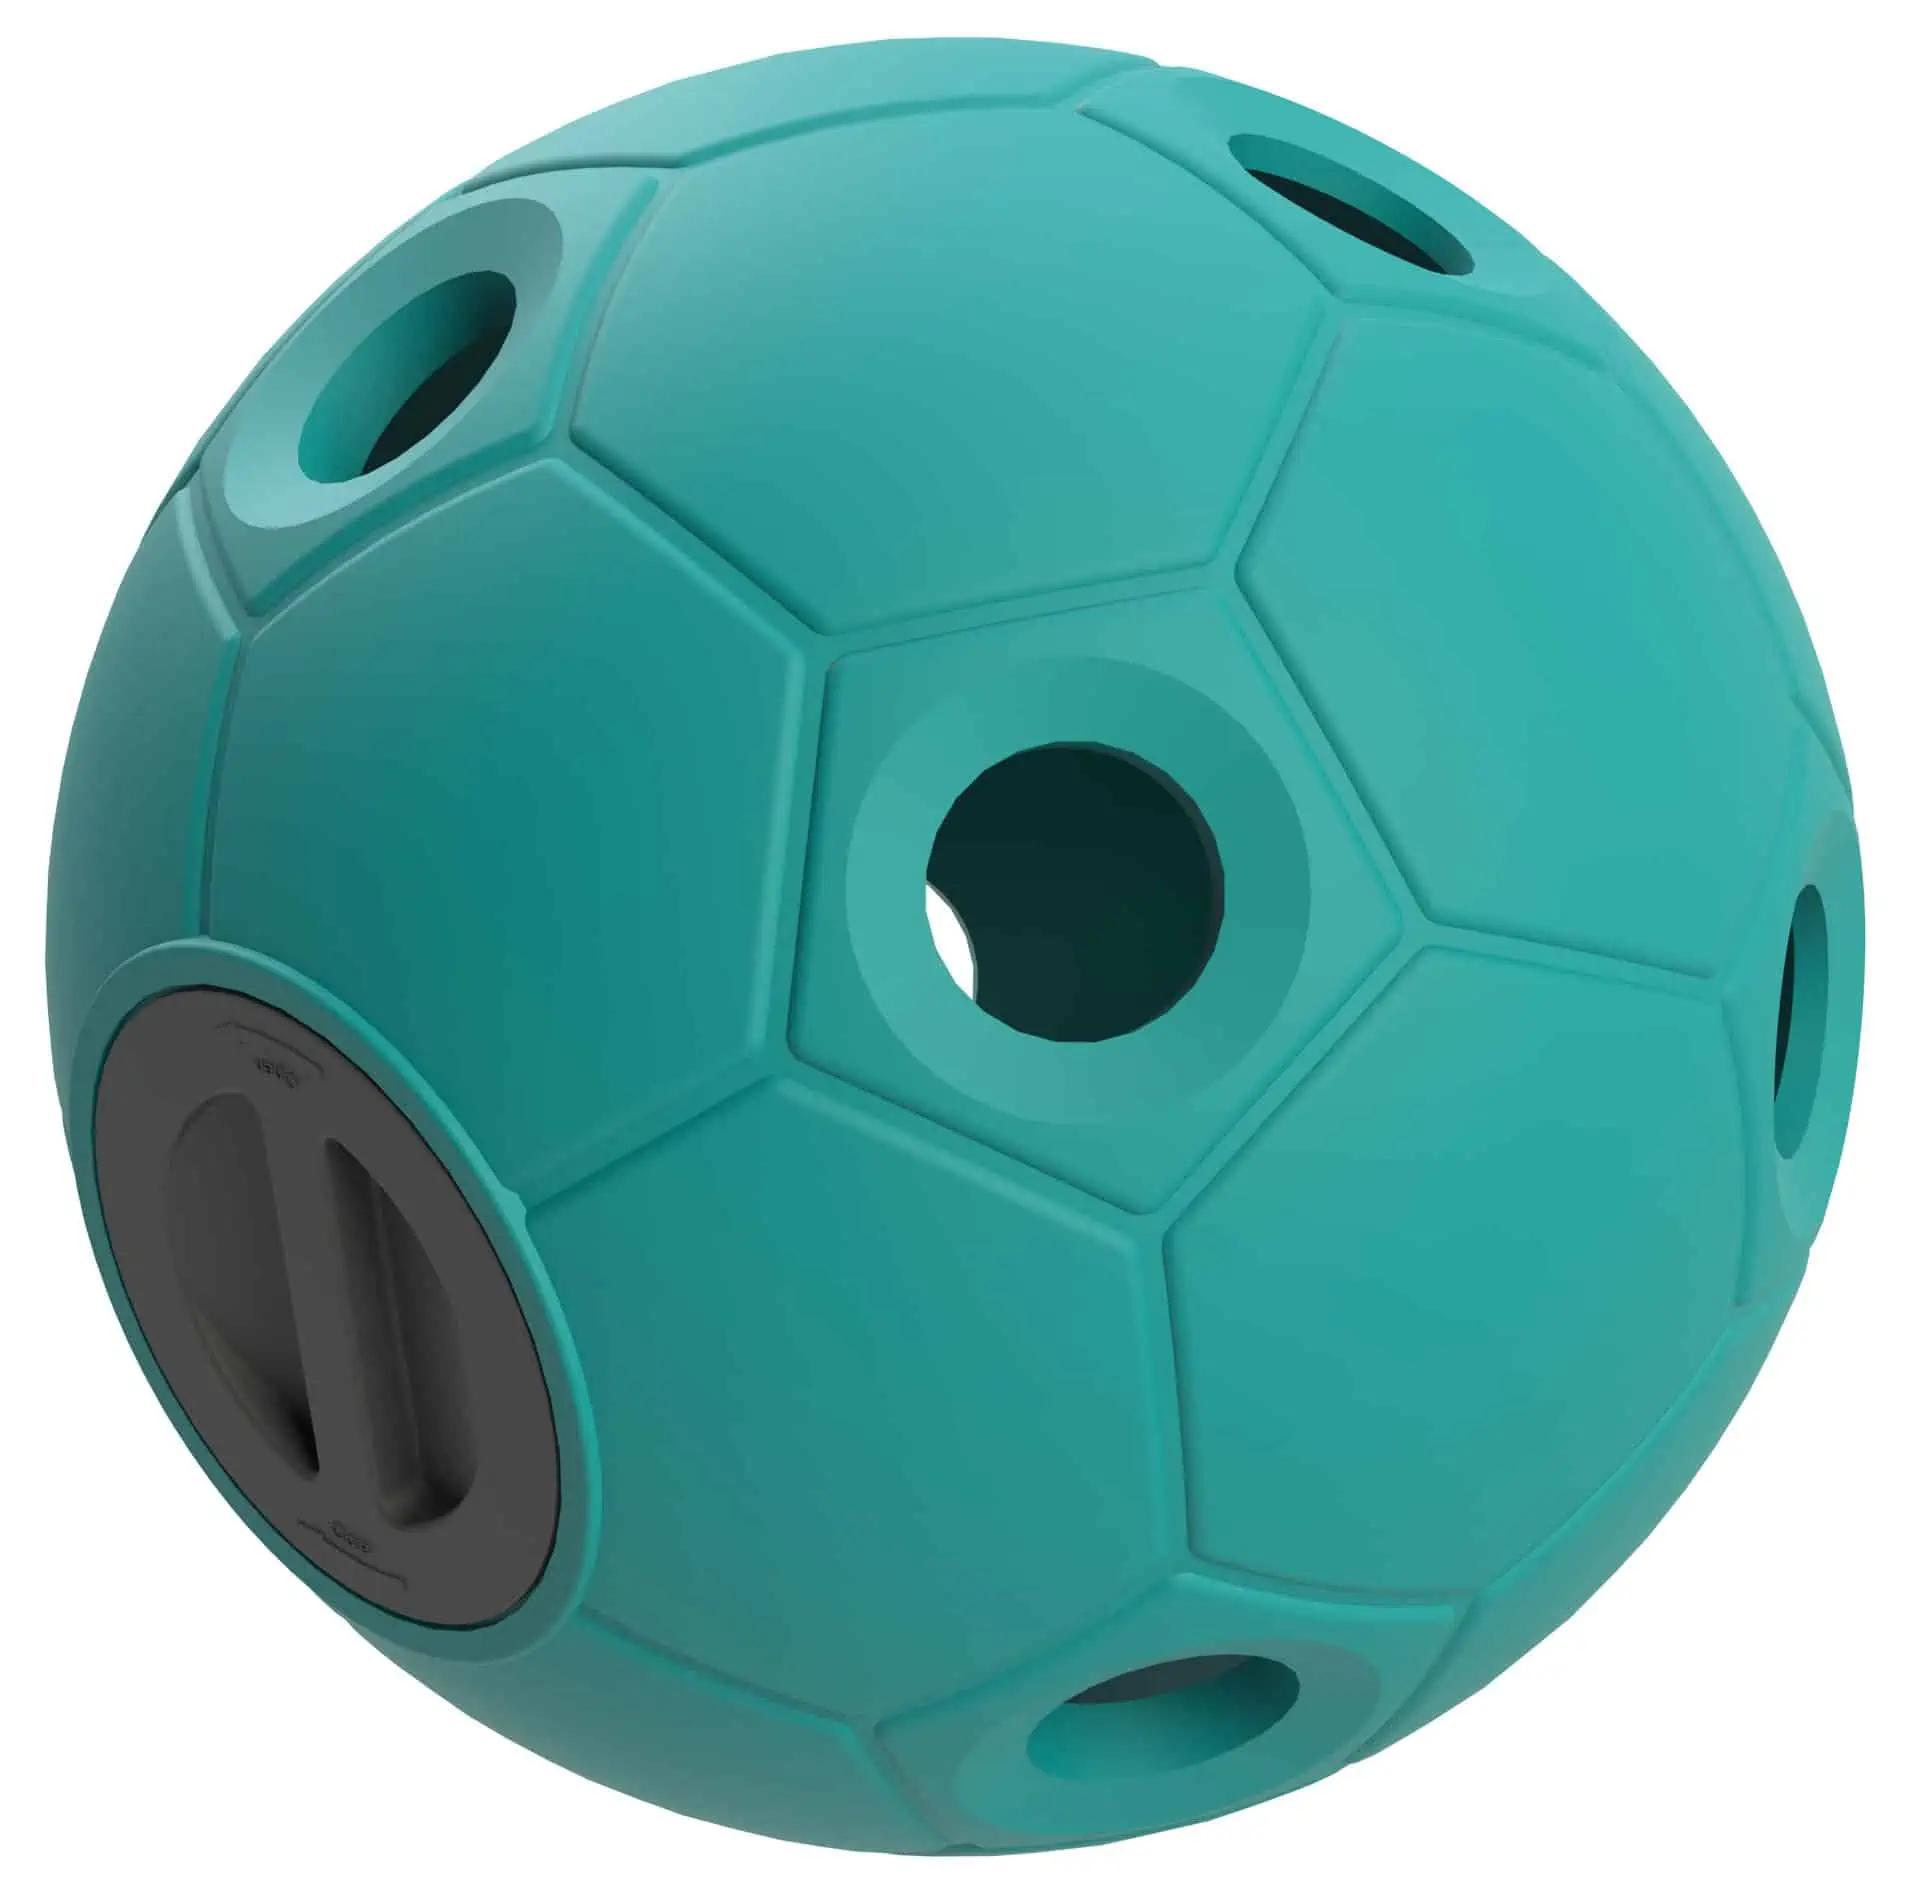 Feed Play Ball Soccer aquamarine